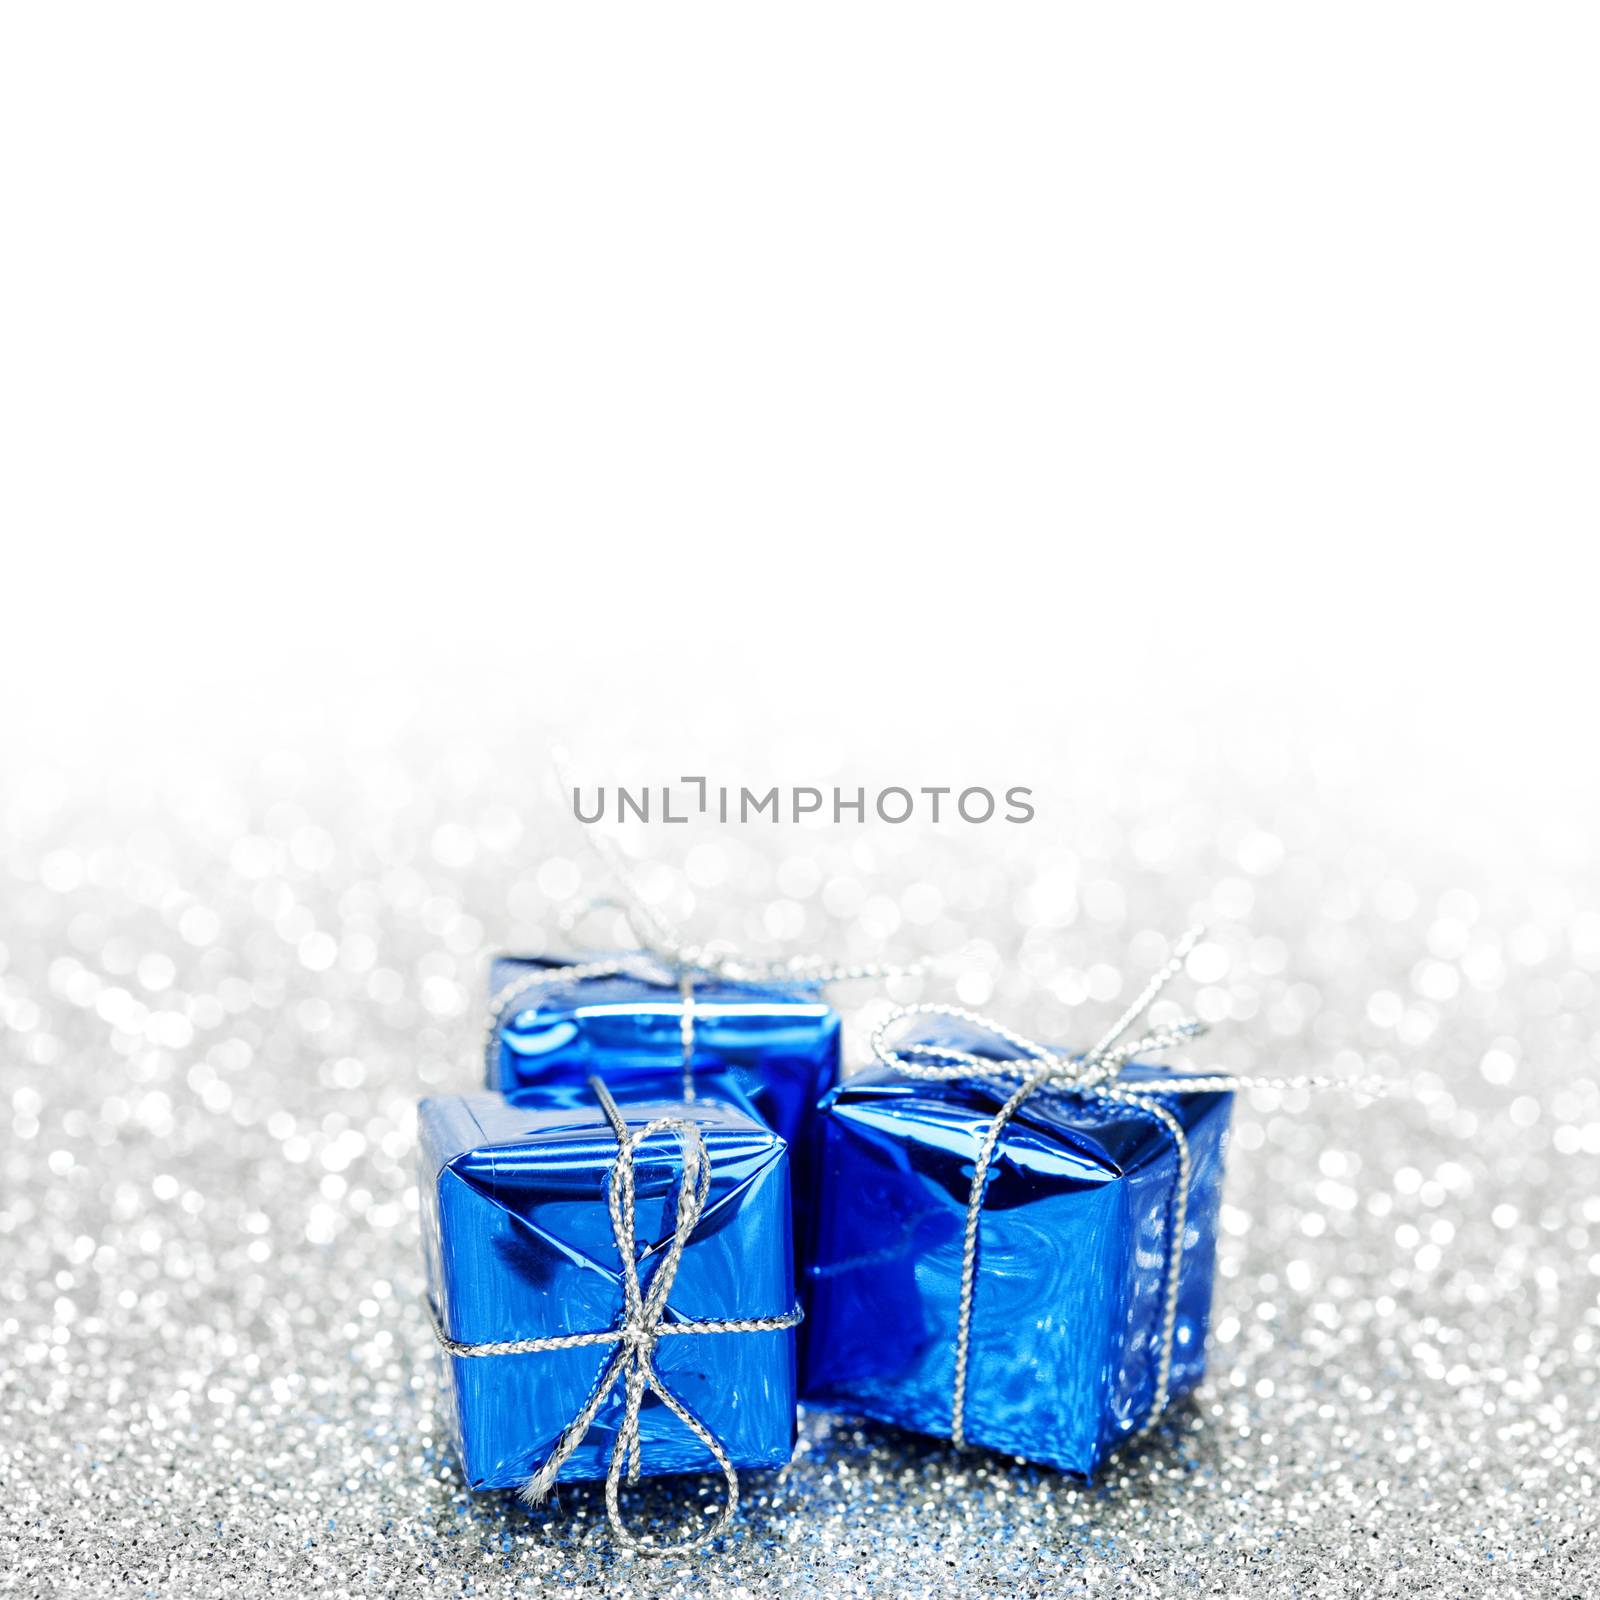 Decorative blue holiday gift boxes on bright shiny background